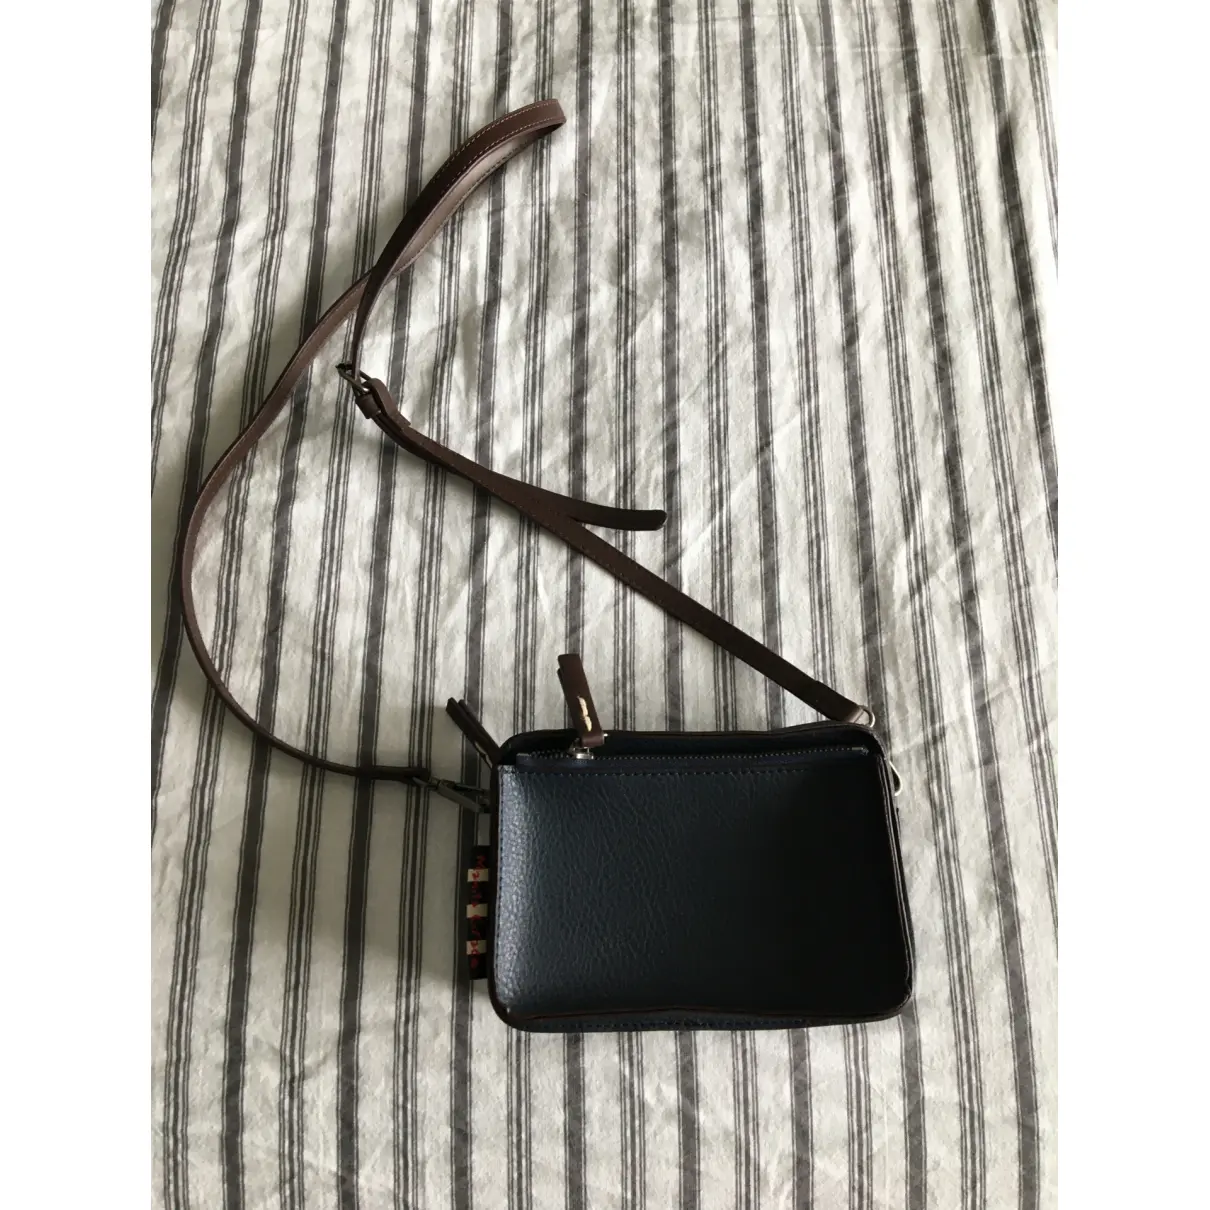 Buy MANILA GRACE Leather handbag online